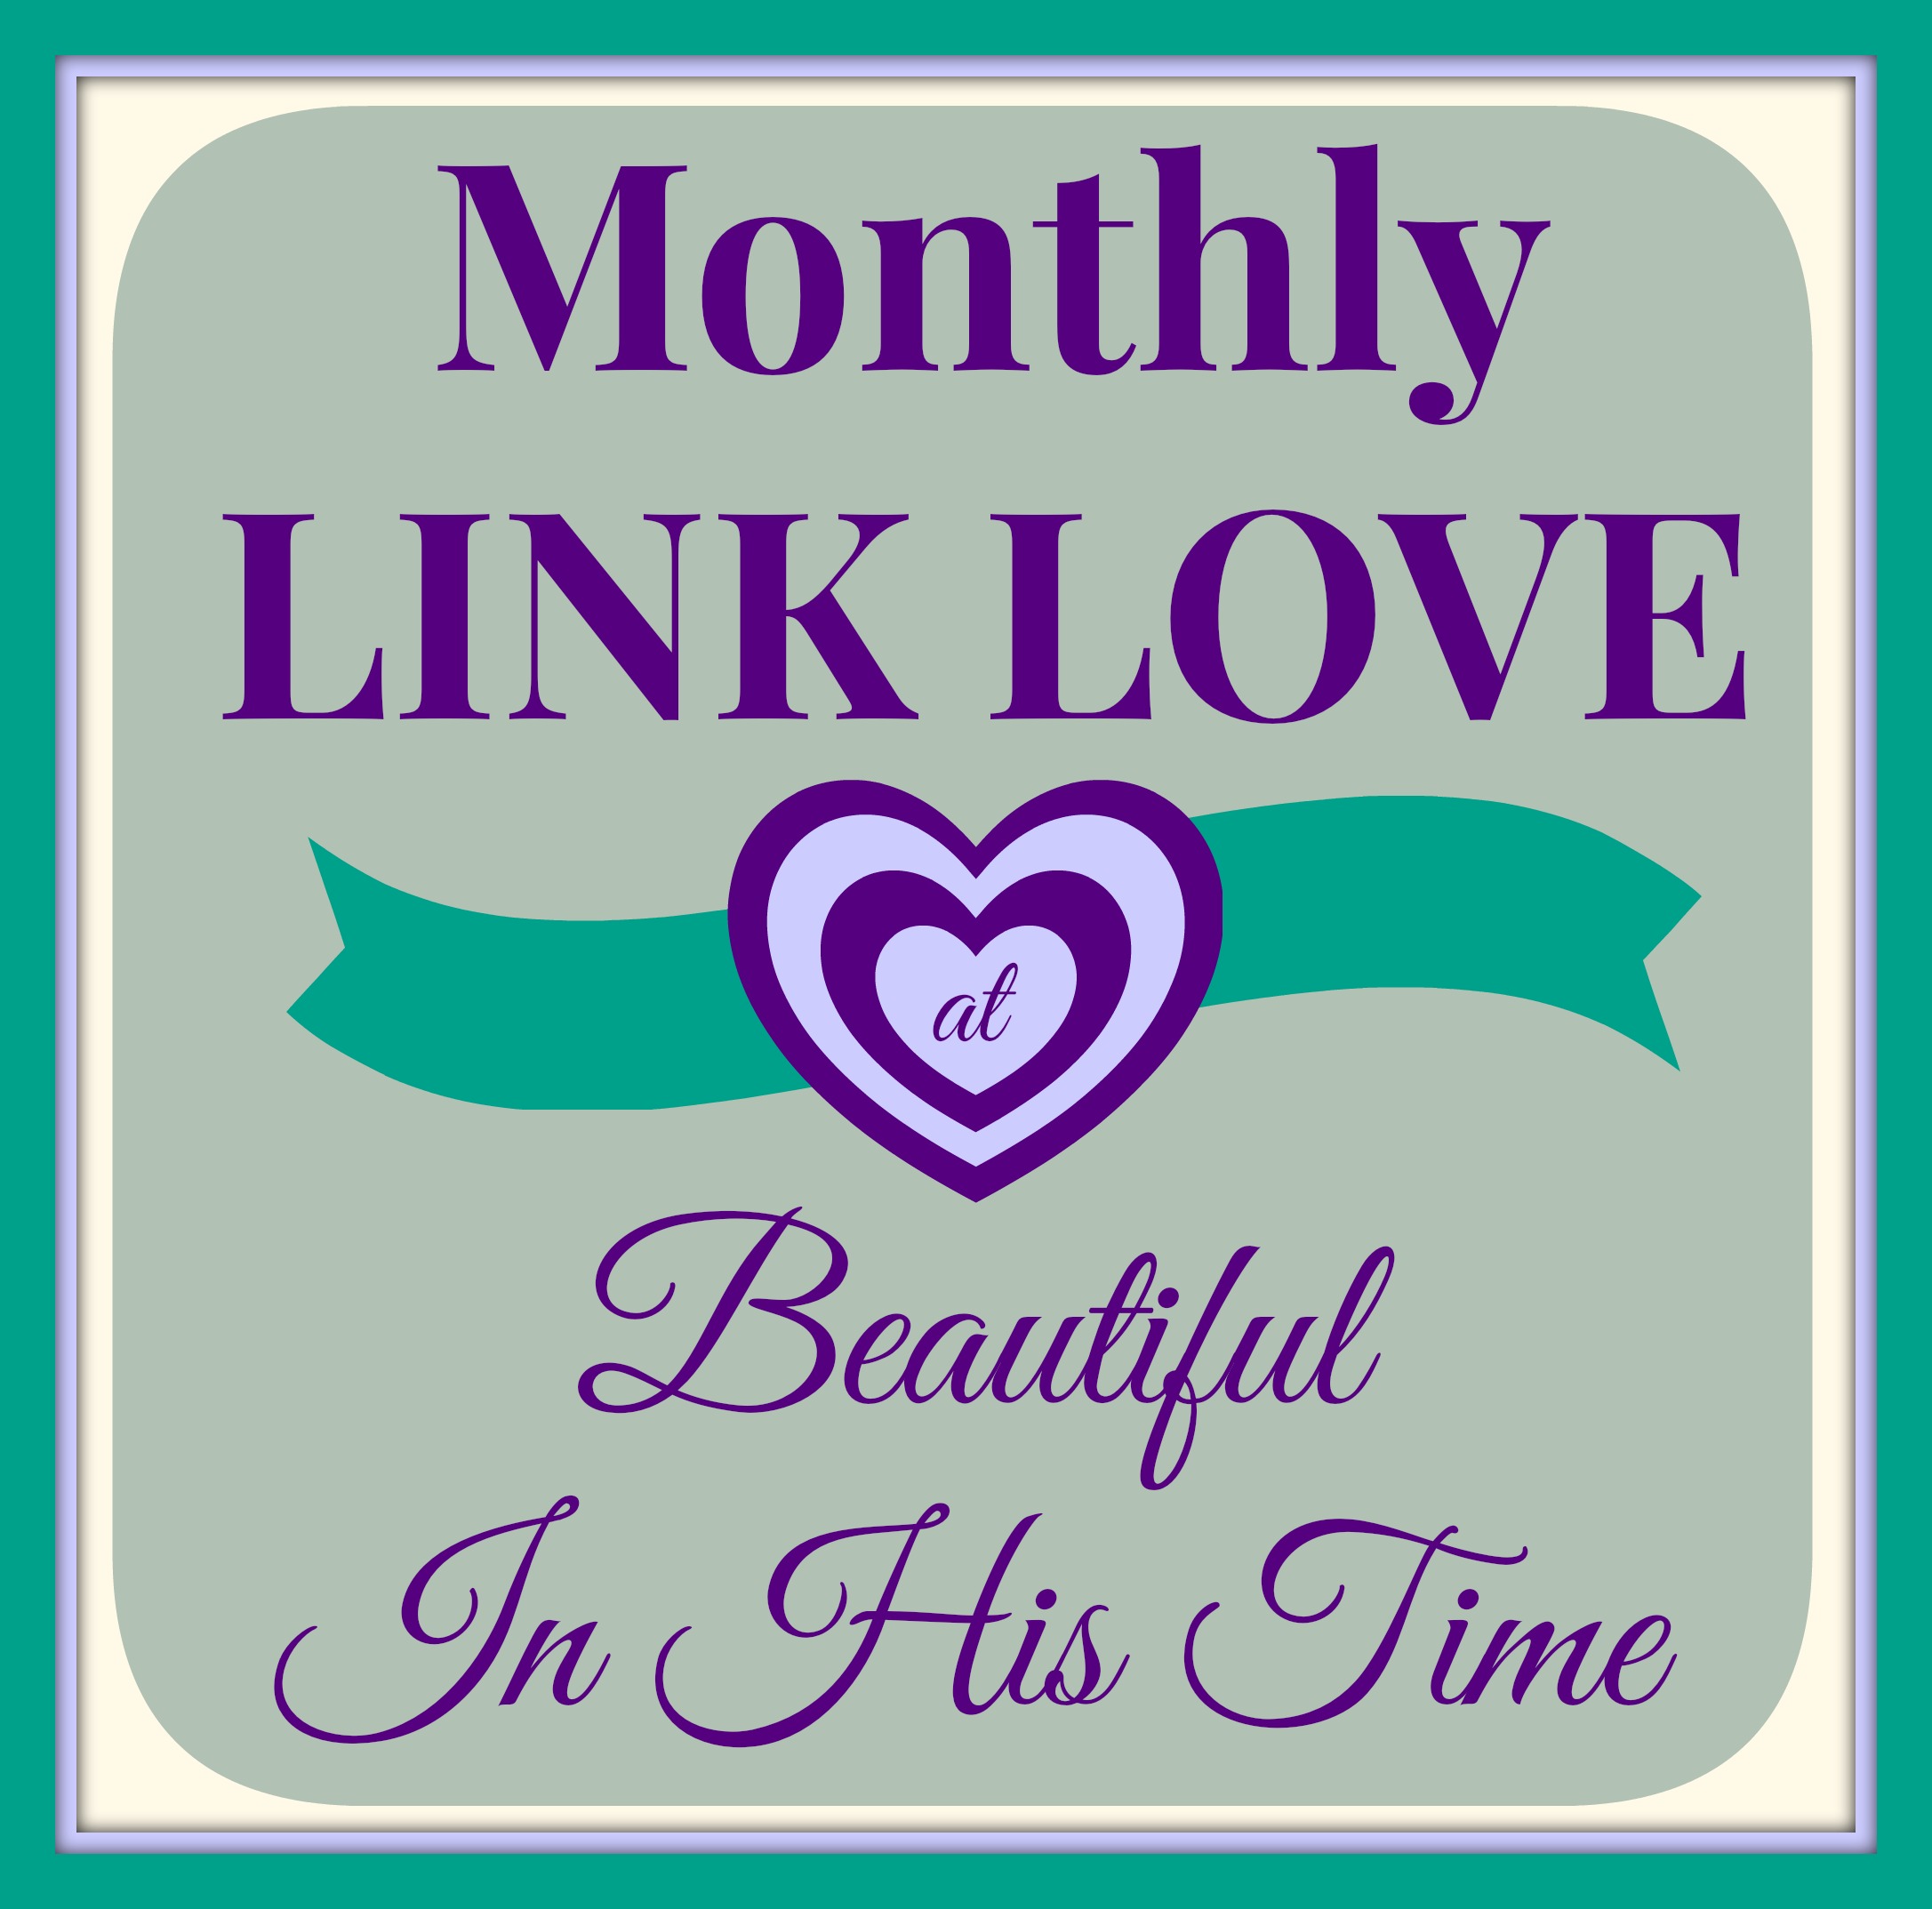 February Link Love @ Beautifulinhistime.com